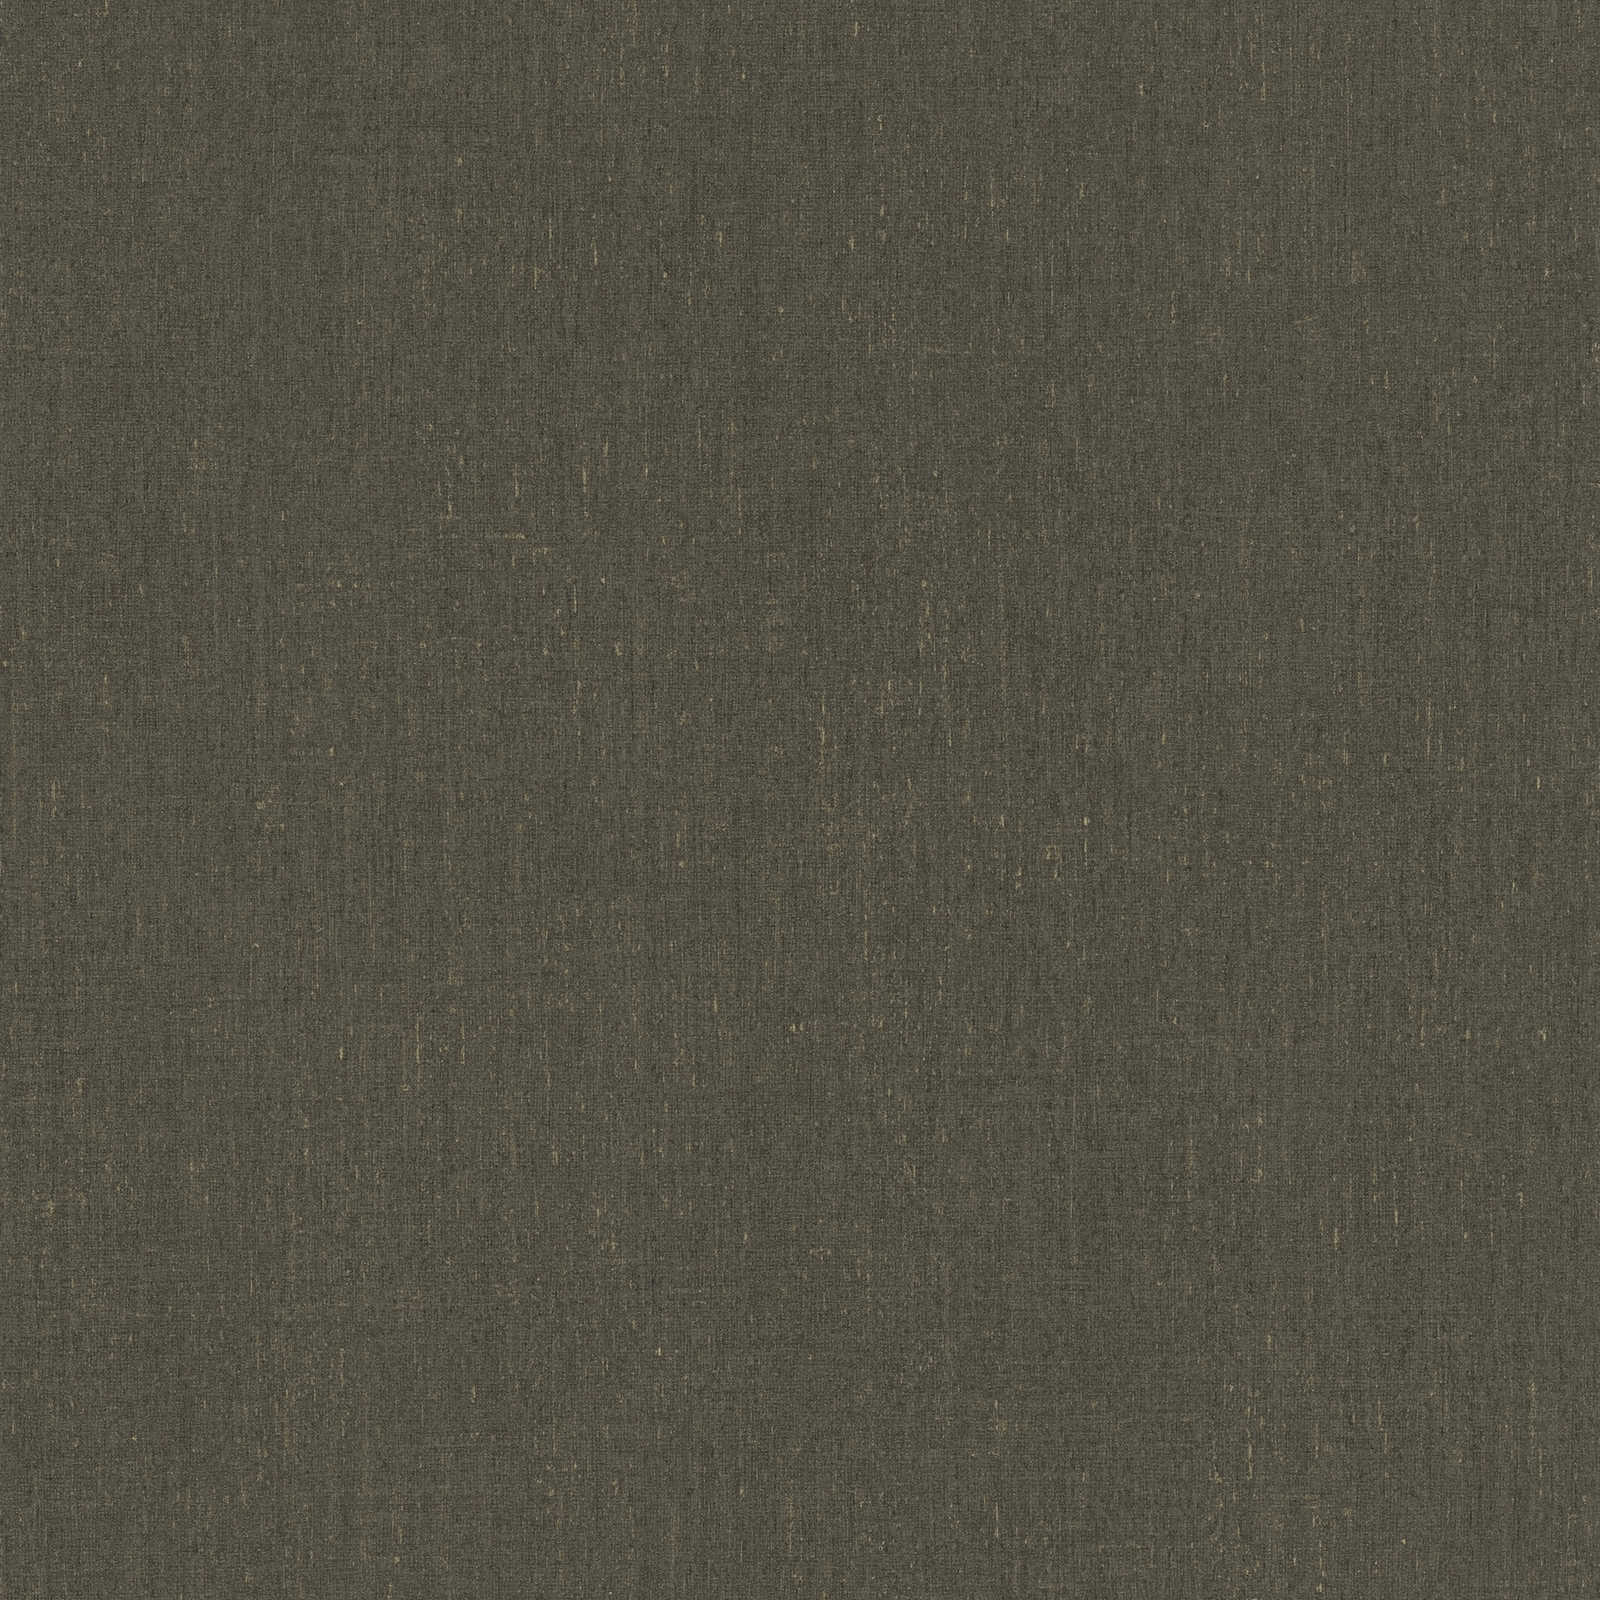 Dark brown wallpaper plain with structure detail - brown, grey
